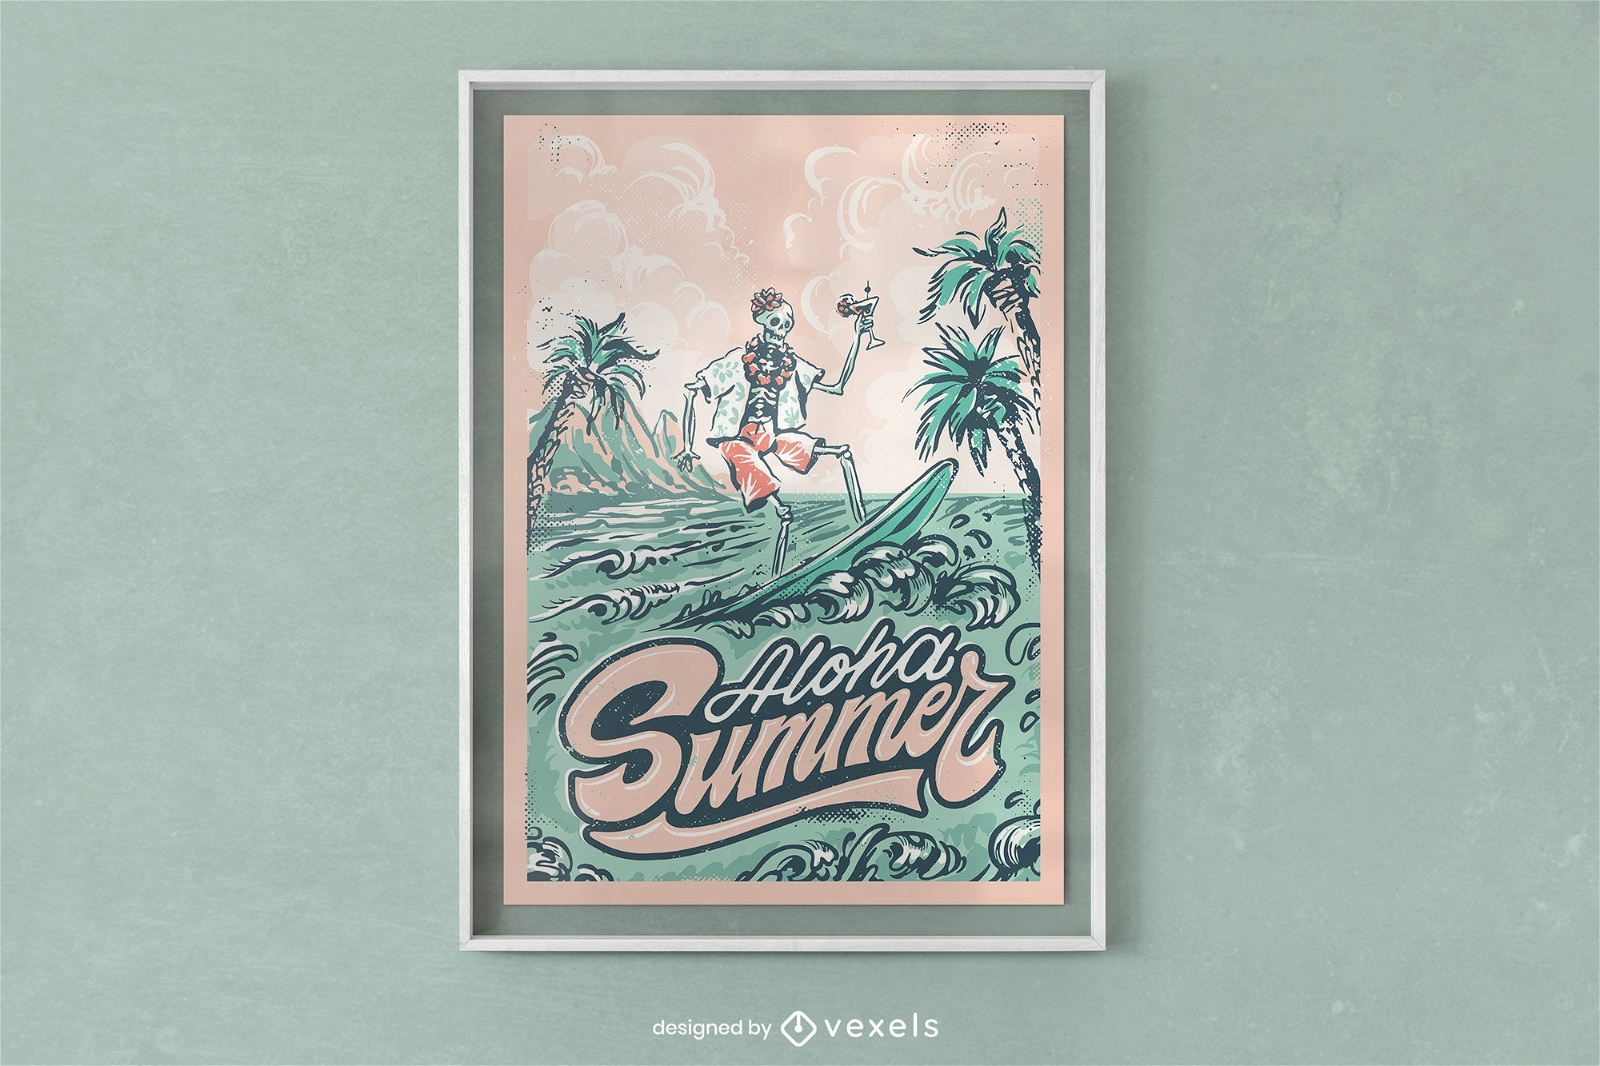 Dise?o de cartel de surf de verano de aloha.